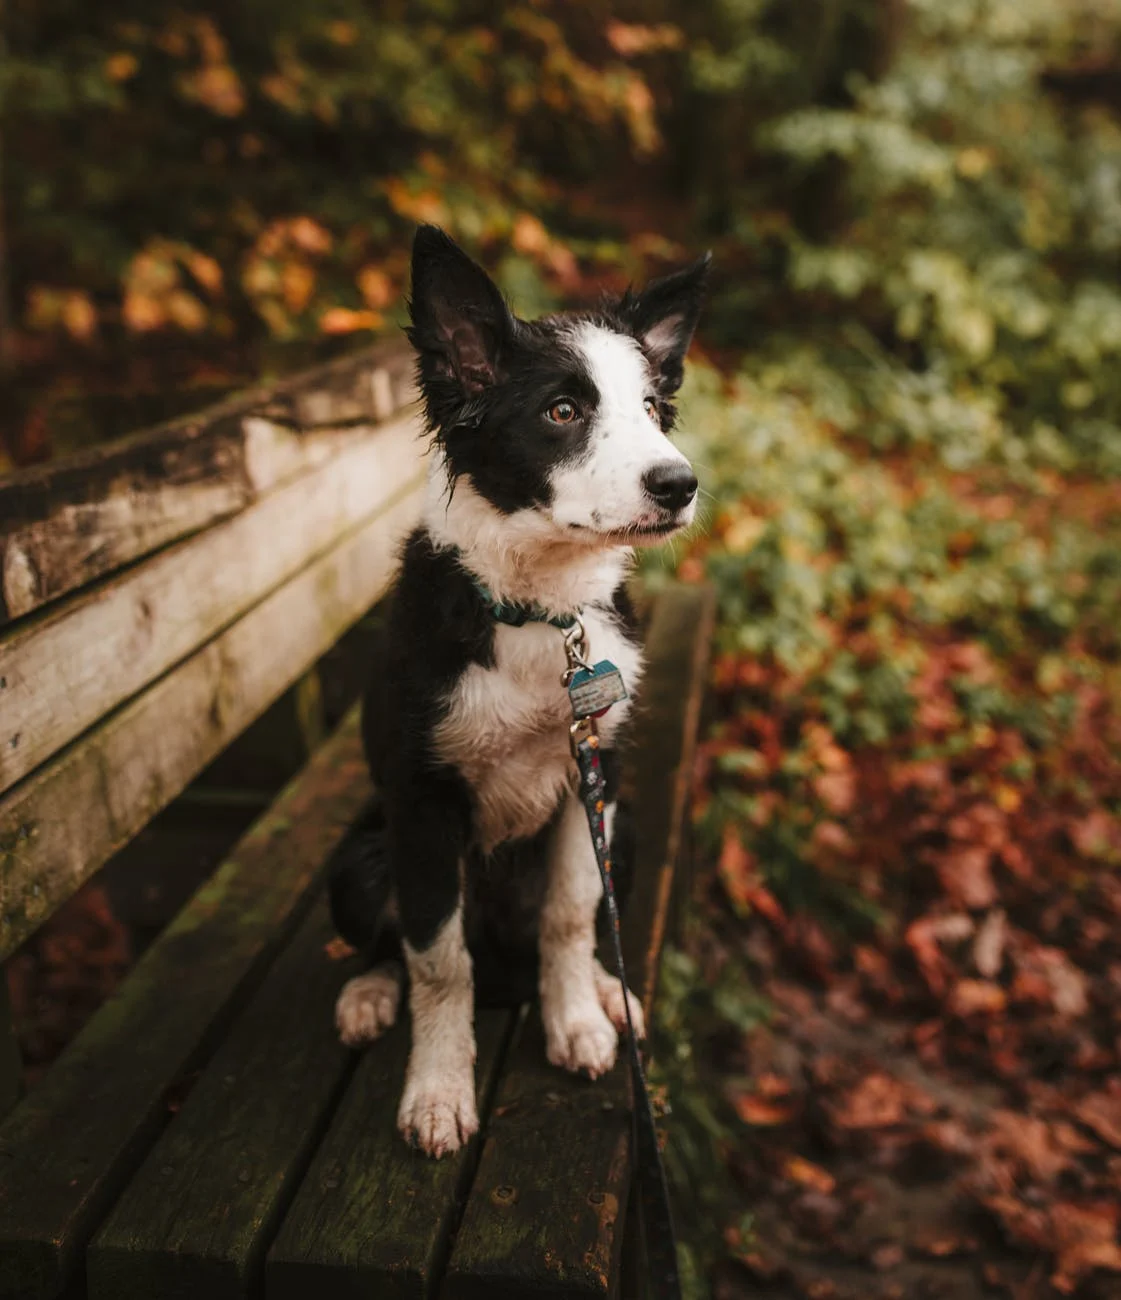 Muddy Border Collie Puppy on a Park Bench